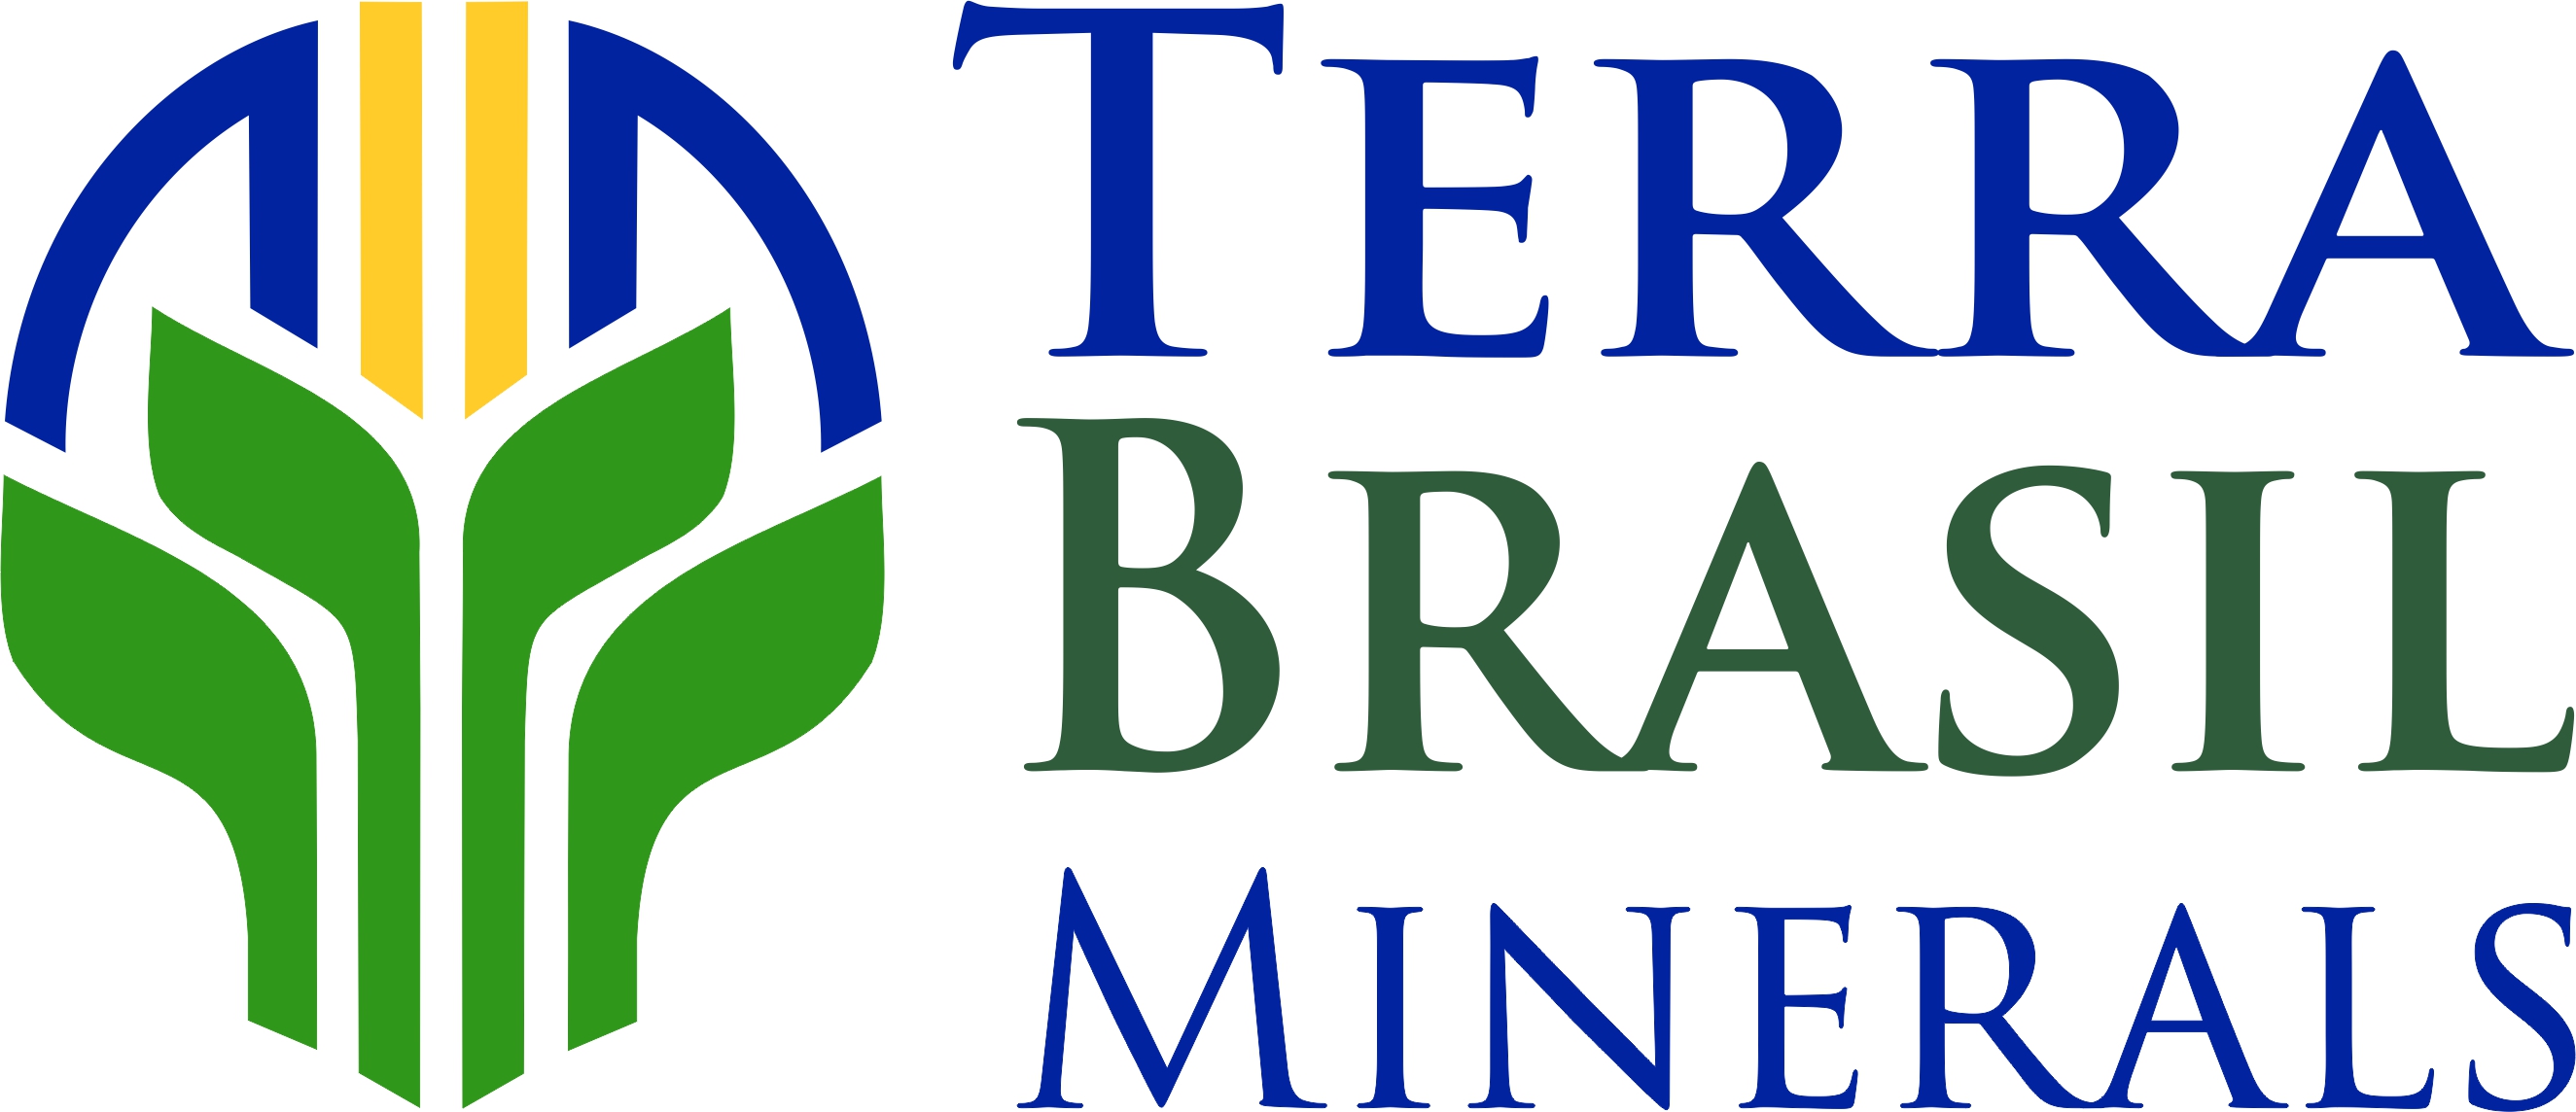 Projetos Sustentáveis na área de mineração - Terra Brasil Minerals